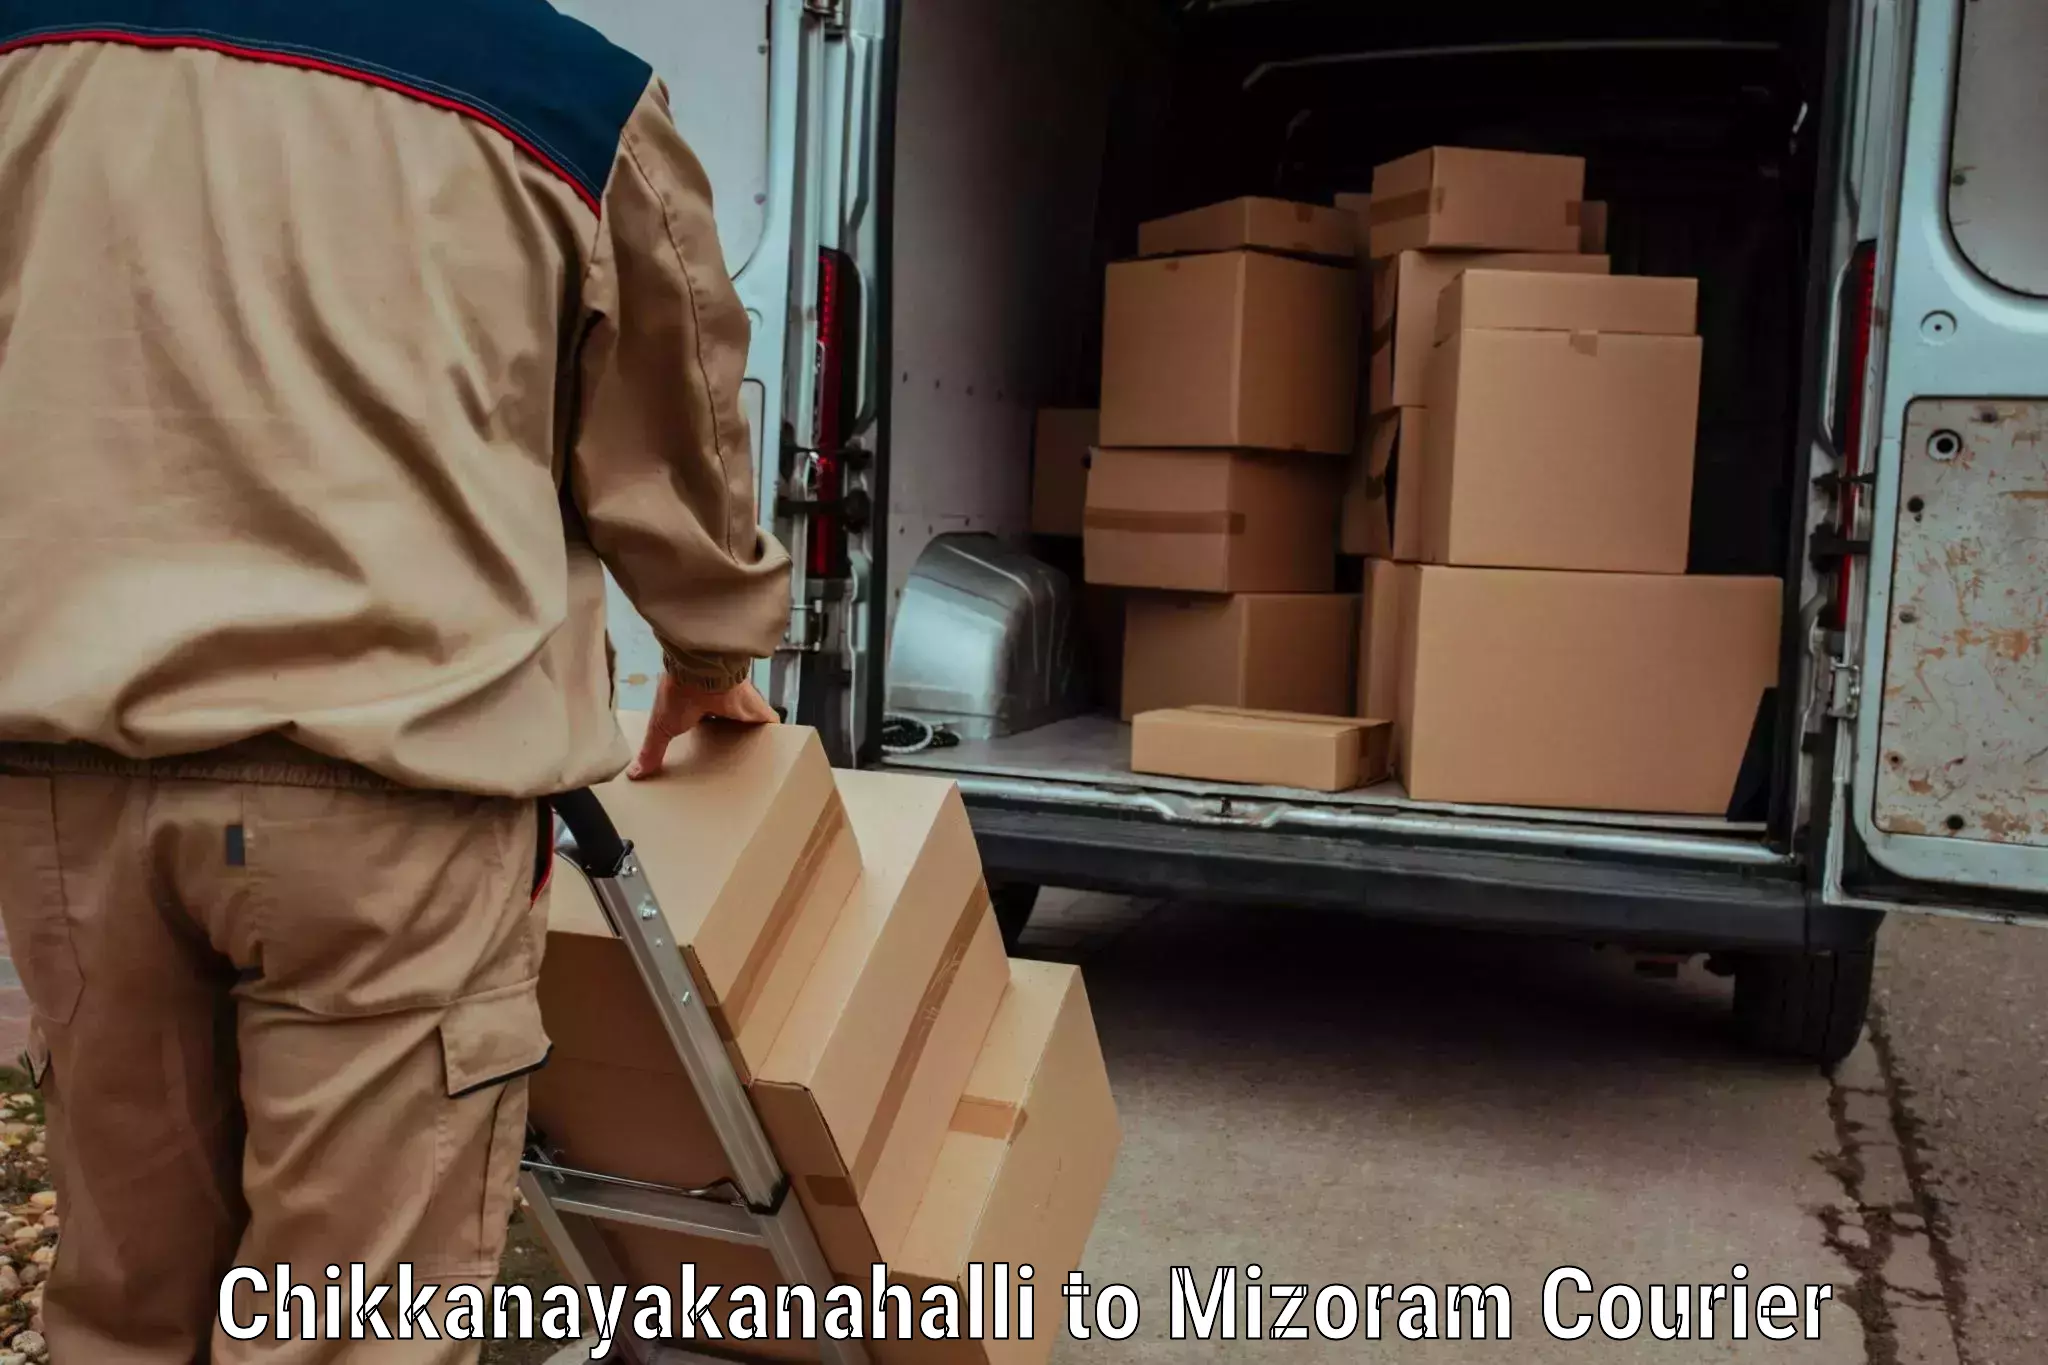 Doorstep delivery service Chikkanayakanahalli to Darlawn